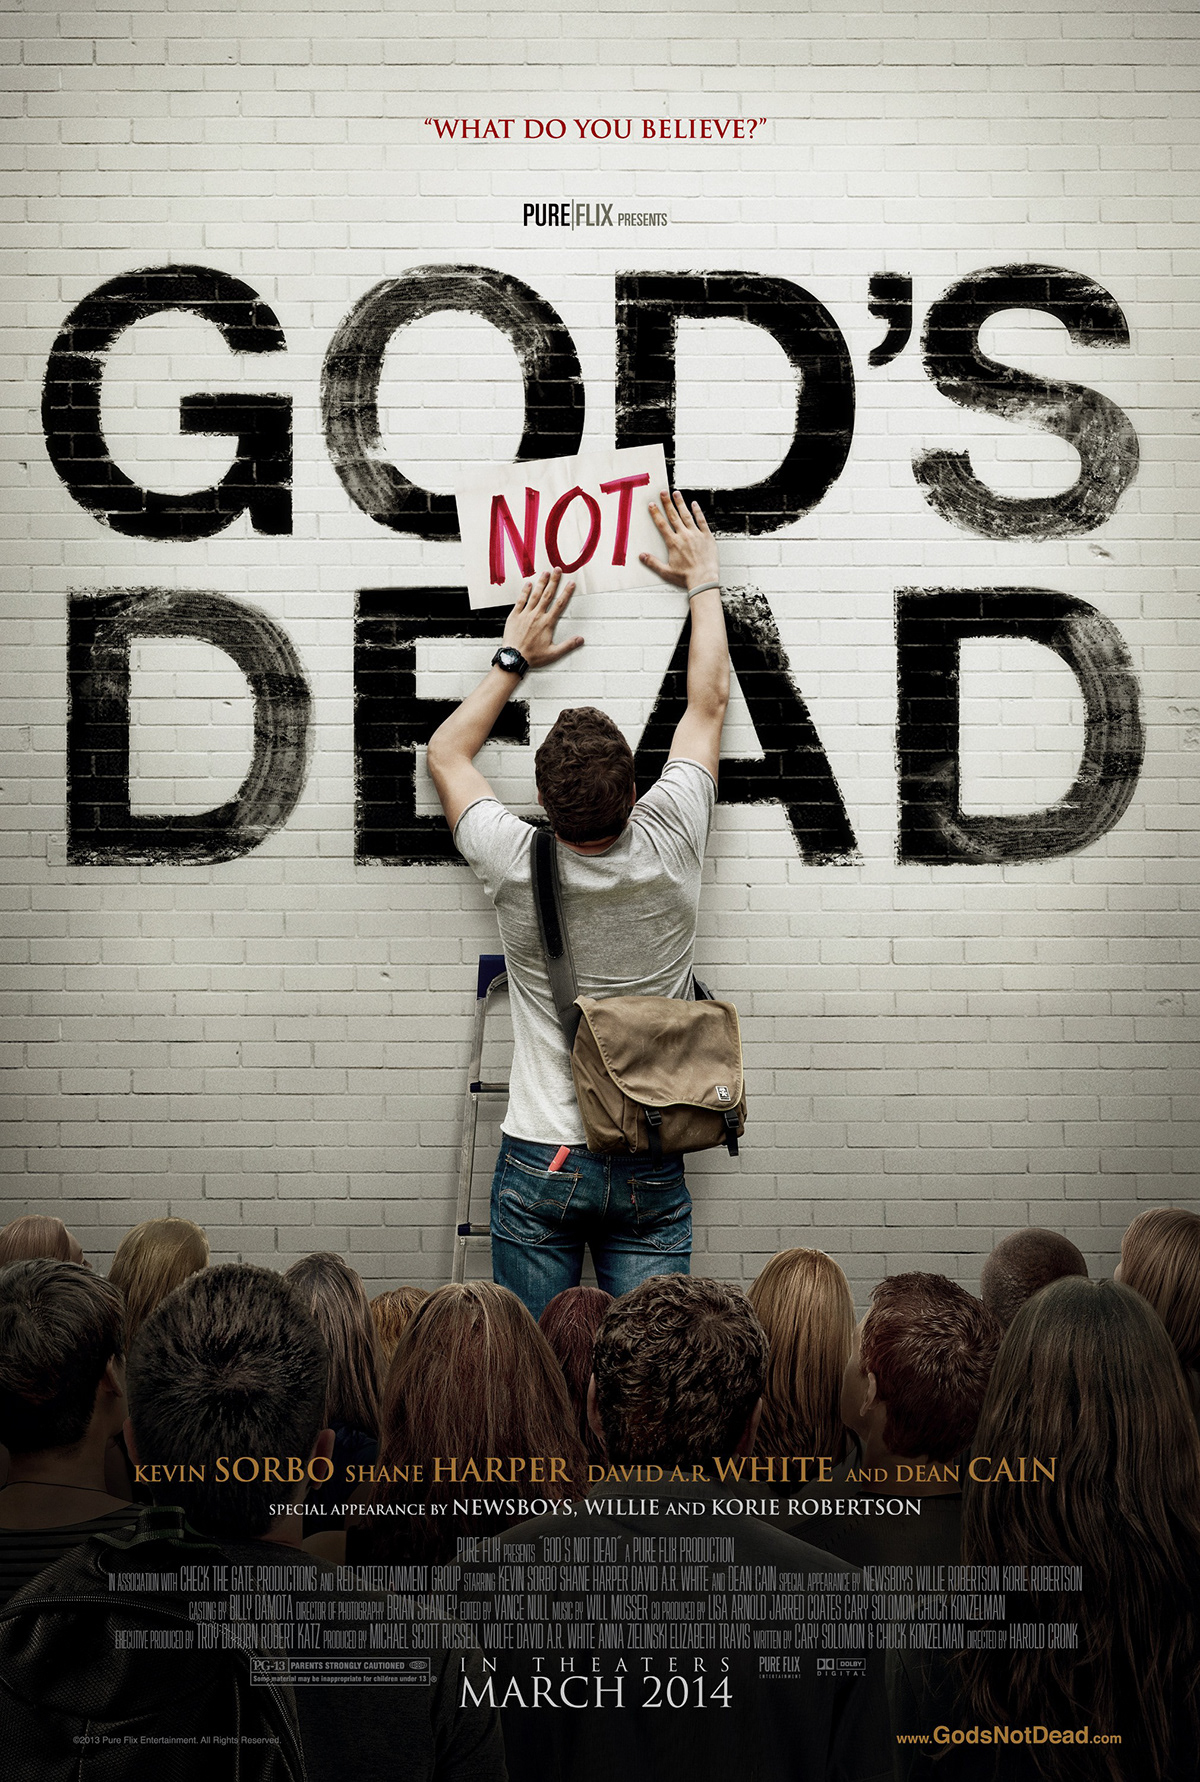 God keyart keyart poster movie Movie Keyart movie poster pureflix believe Christian Netflix